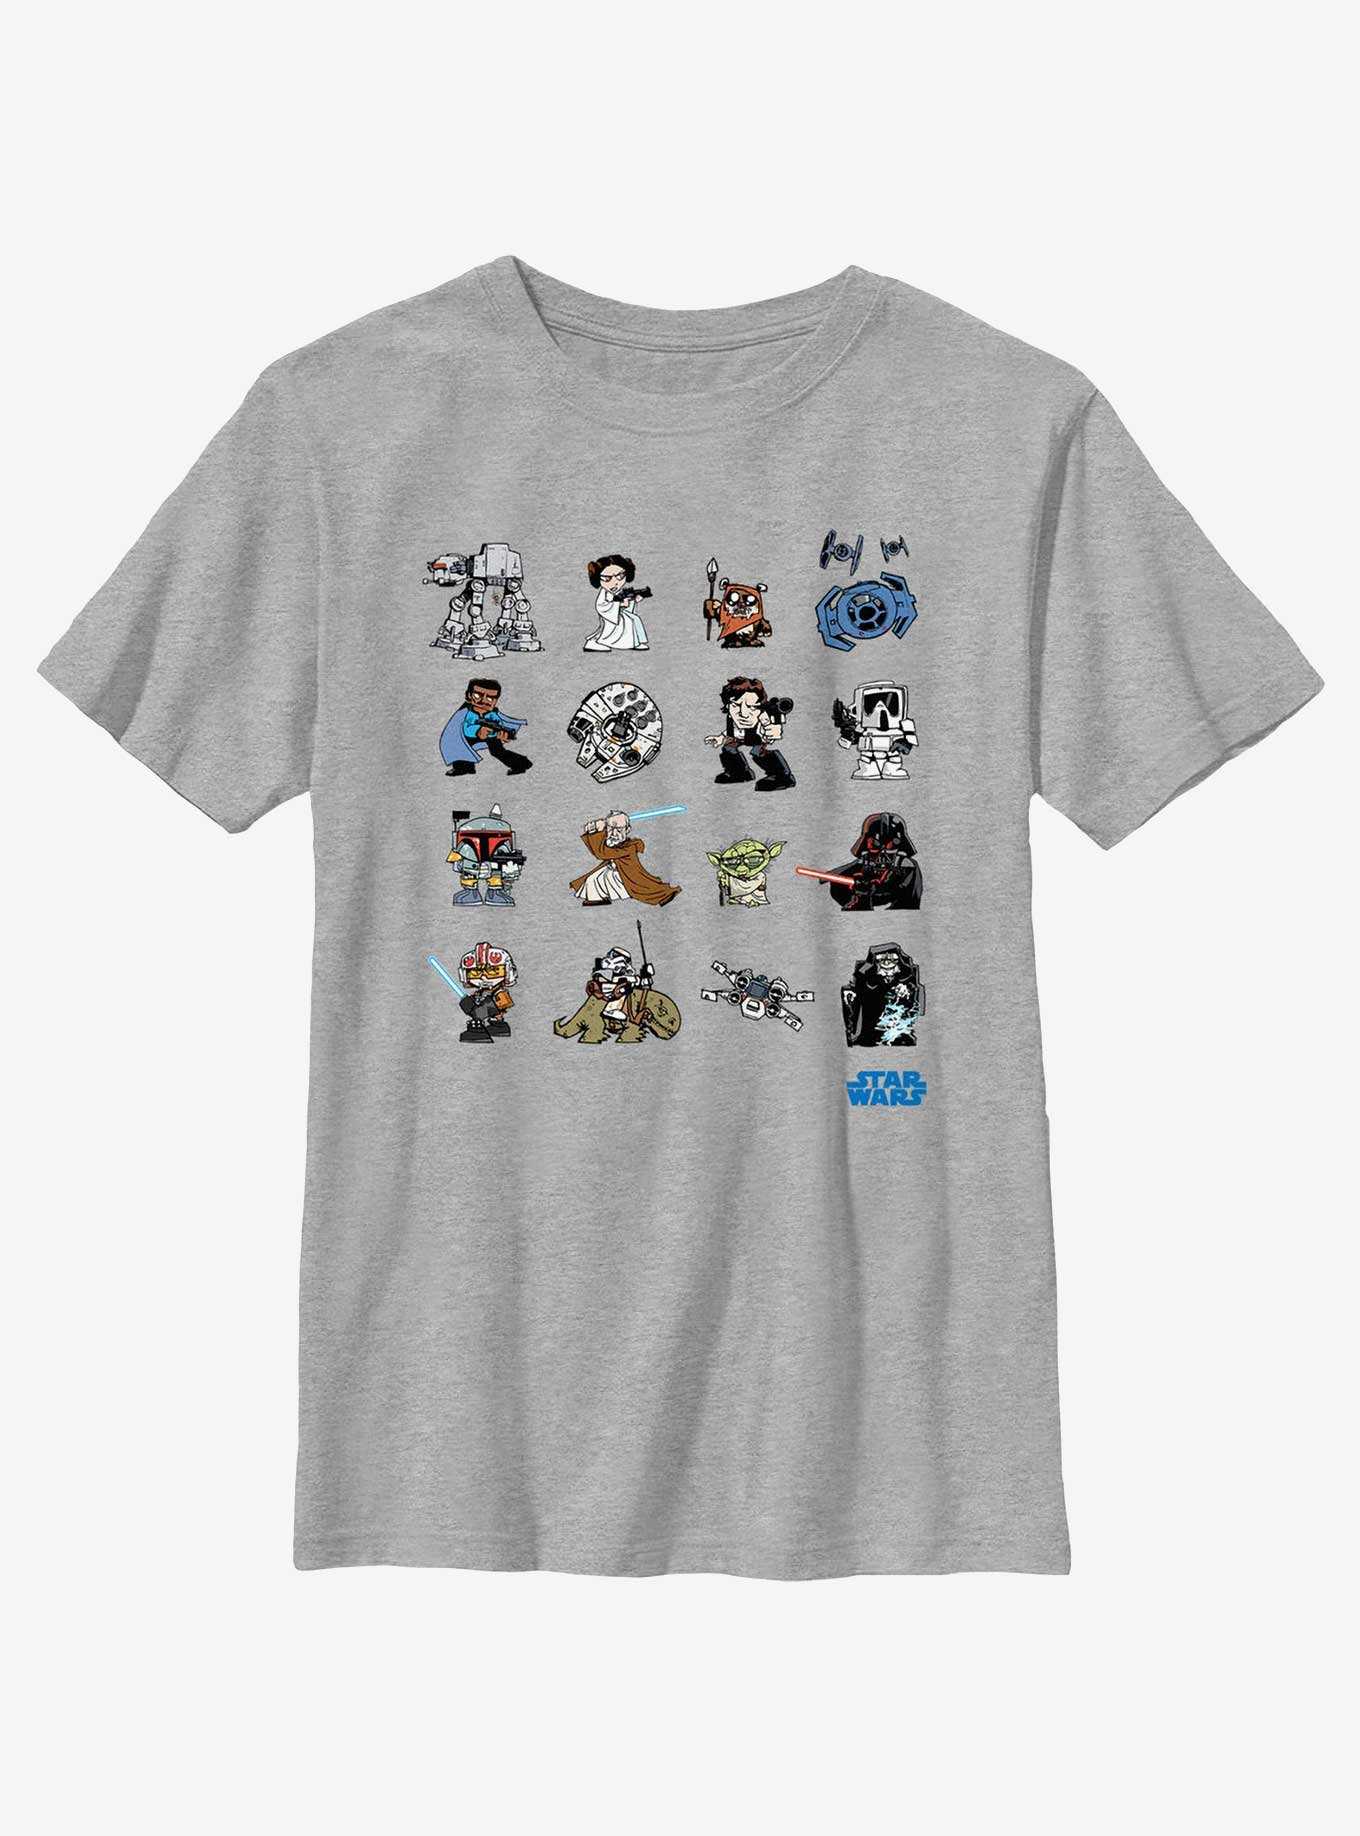 Star Wars Minty Wars Youth T-Shirt, , hi-res